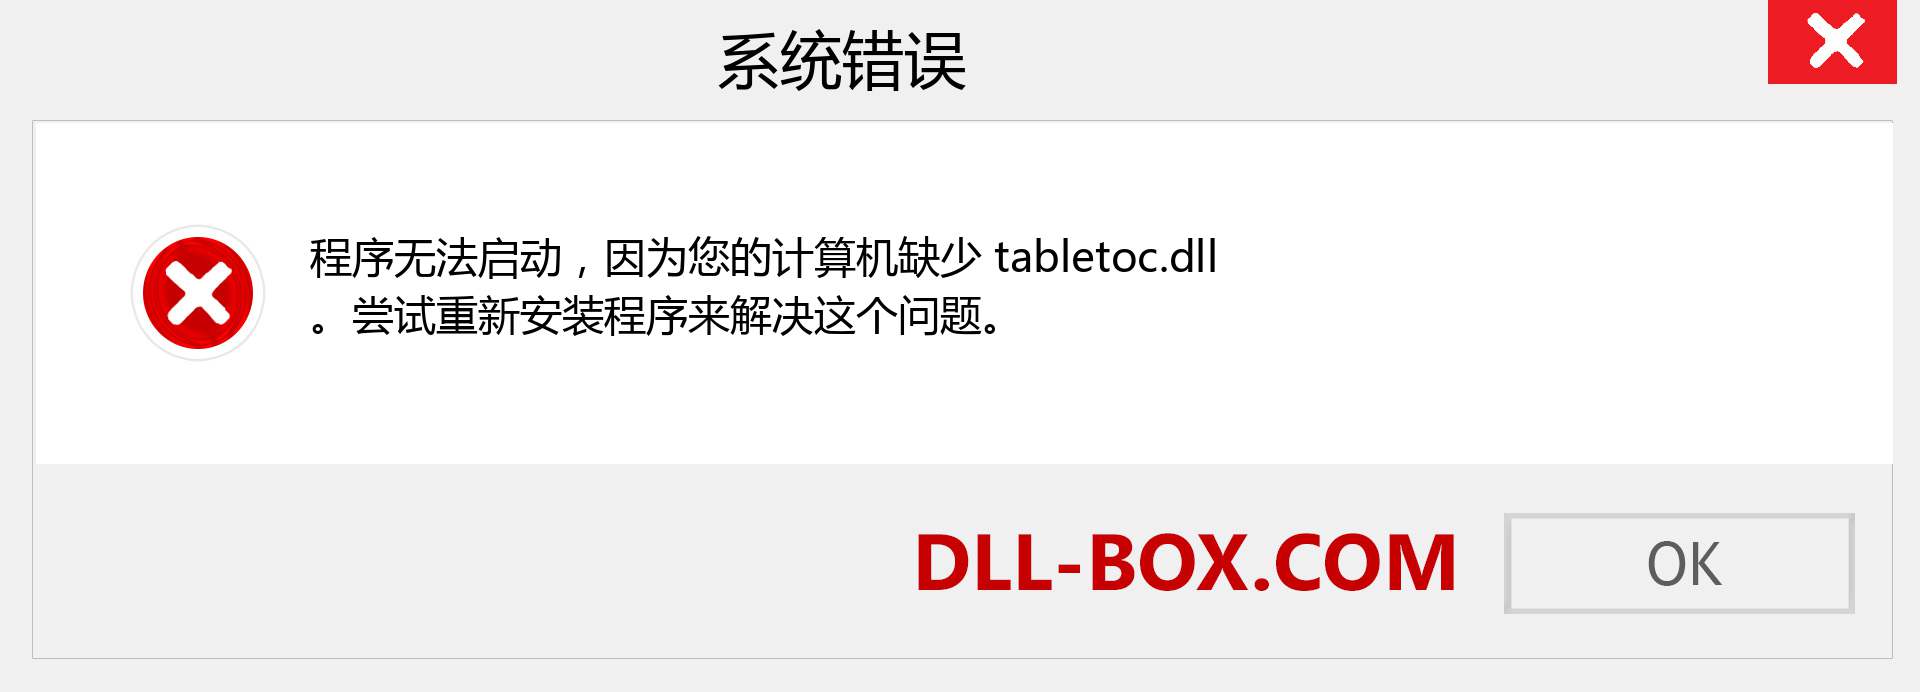 tabletoc.dll 文件丢失？。 适用于 Windows 7、8、10 的下载 - 修复 Windows、照片、图像上的 tabletoc dll 丢失错误